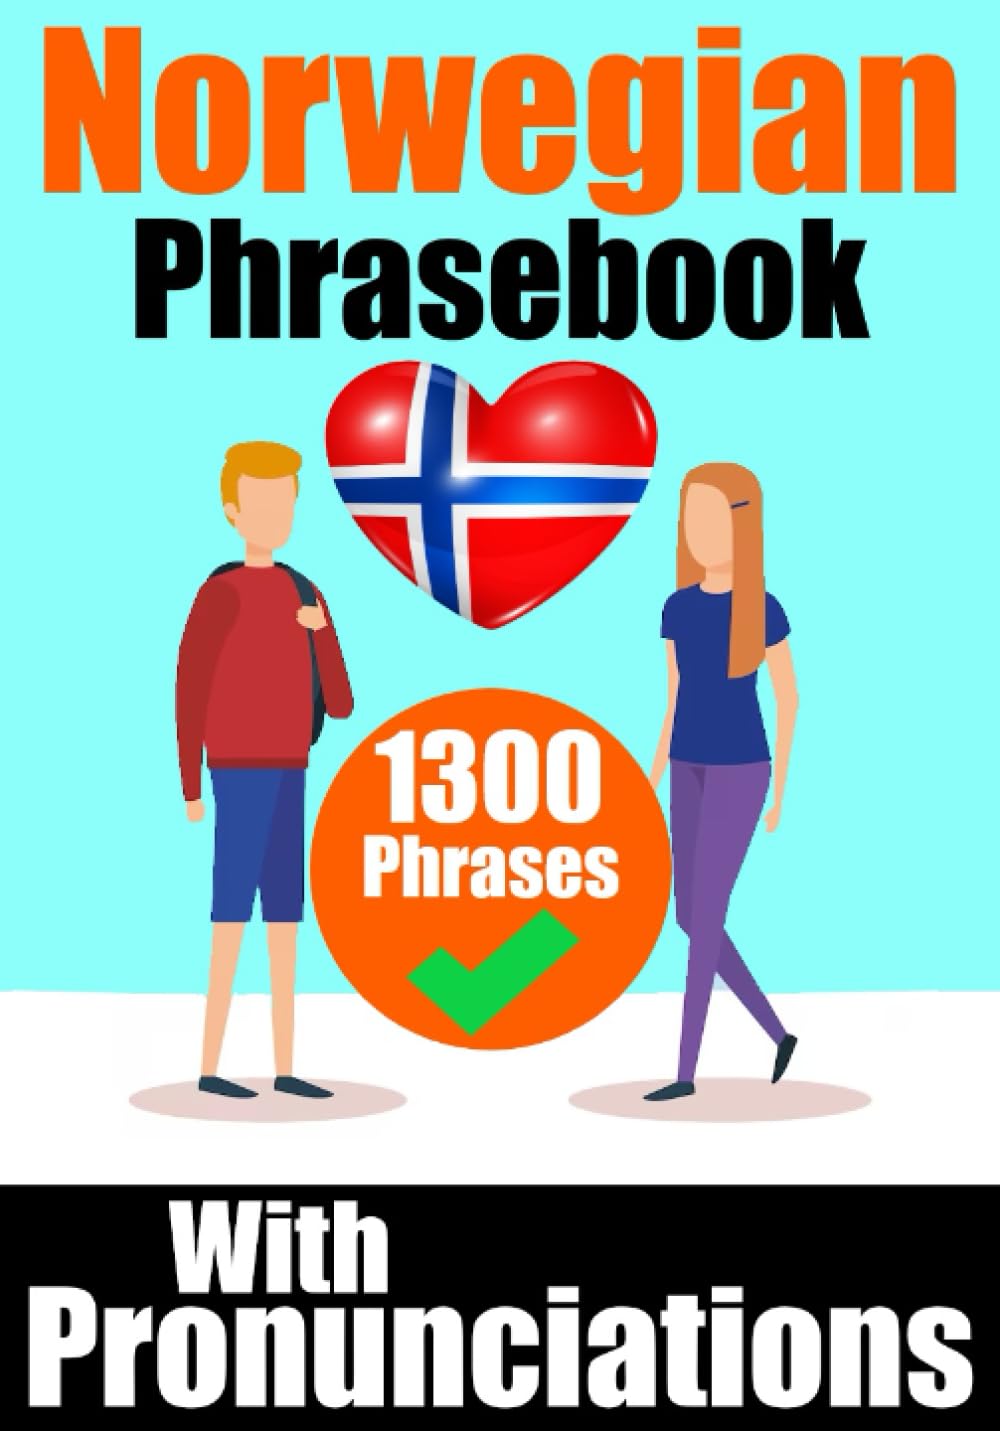 Norwegian Phrasebook: 1300 Sentences with English Translations and Pronunciation Guide - Skriuwer.com